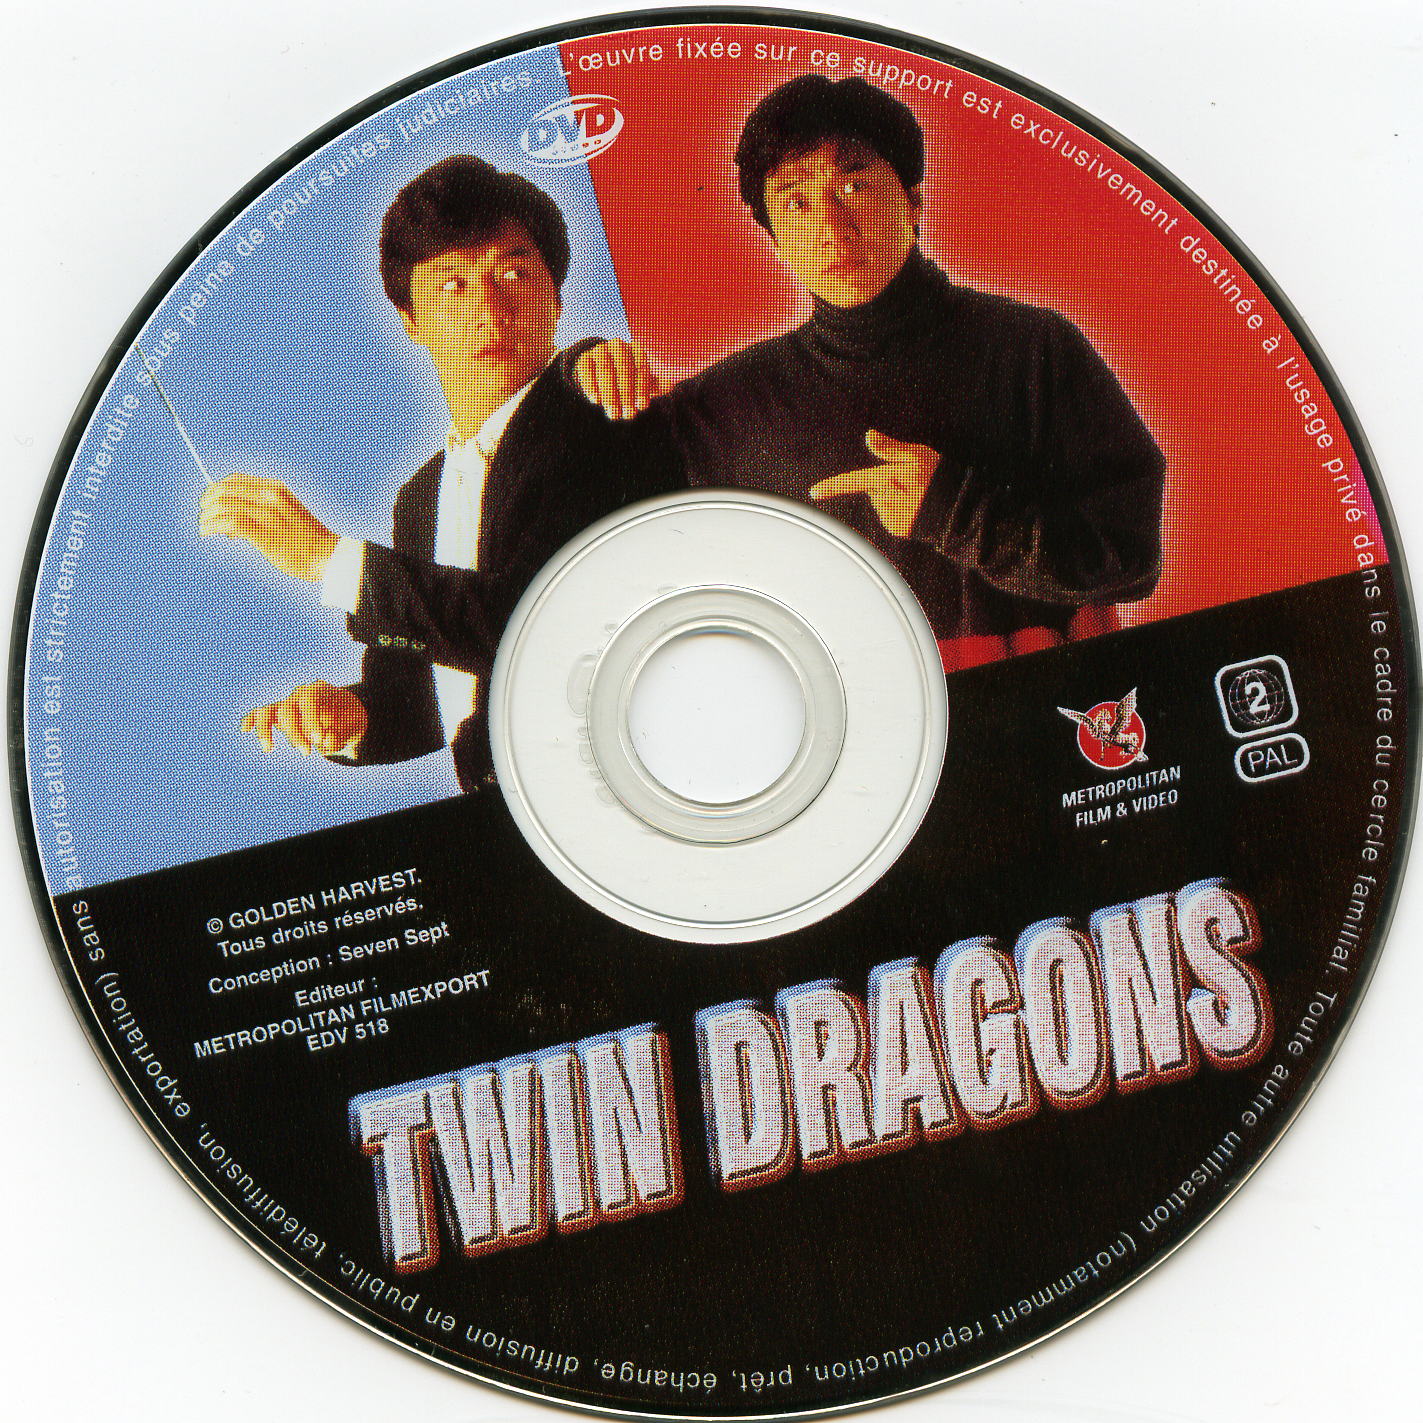 Twin dragons